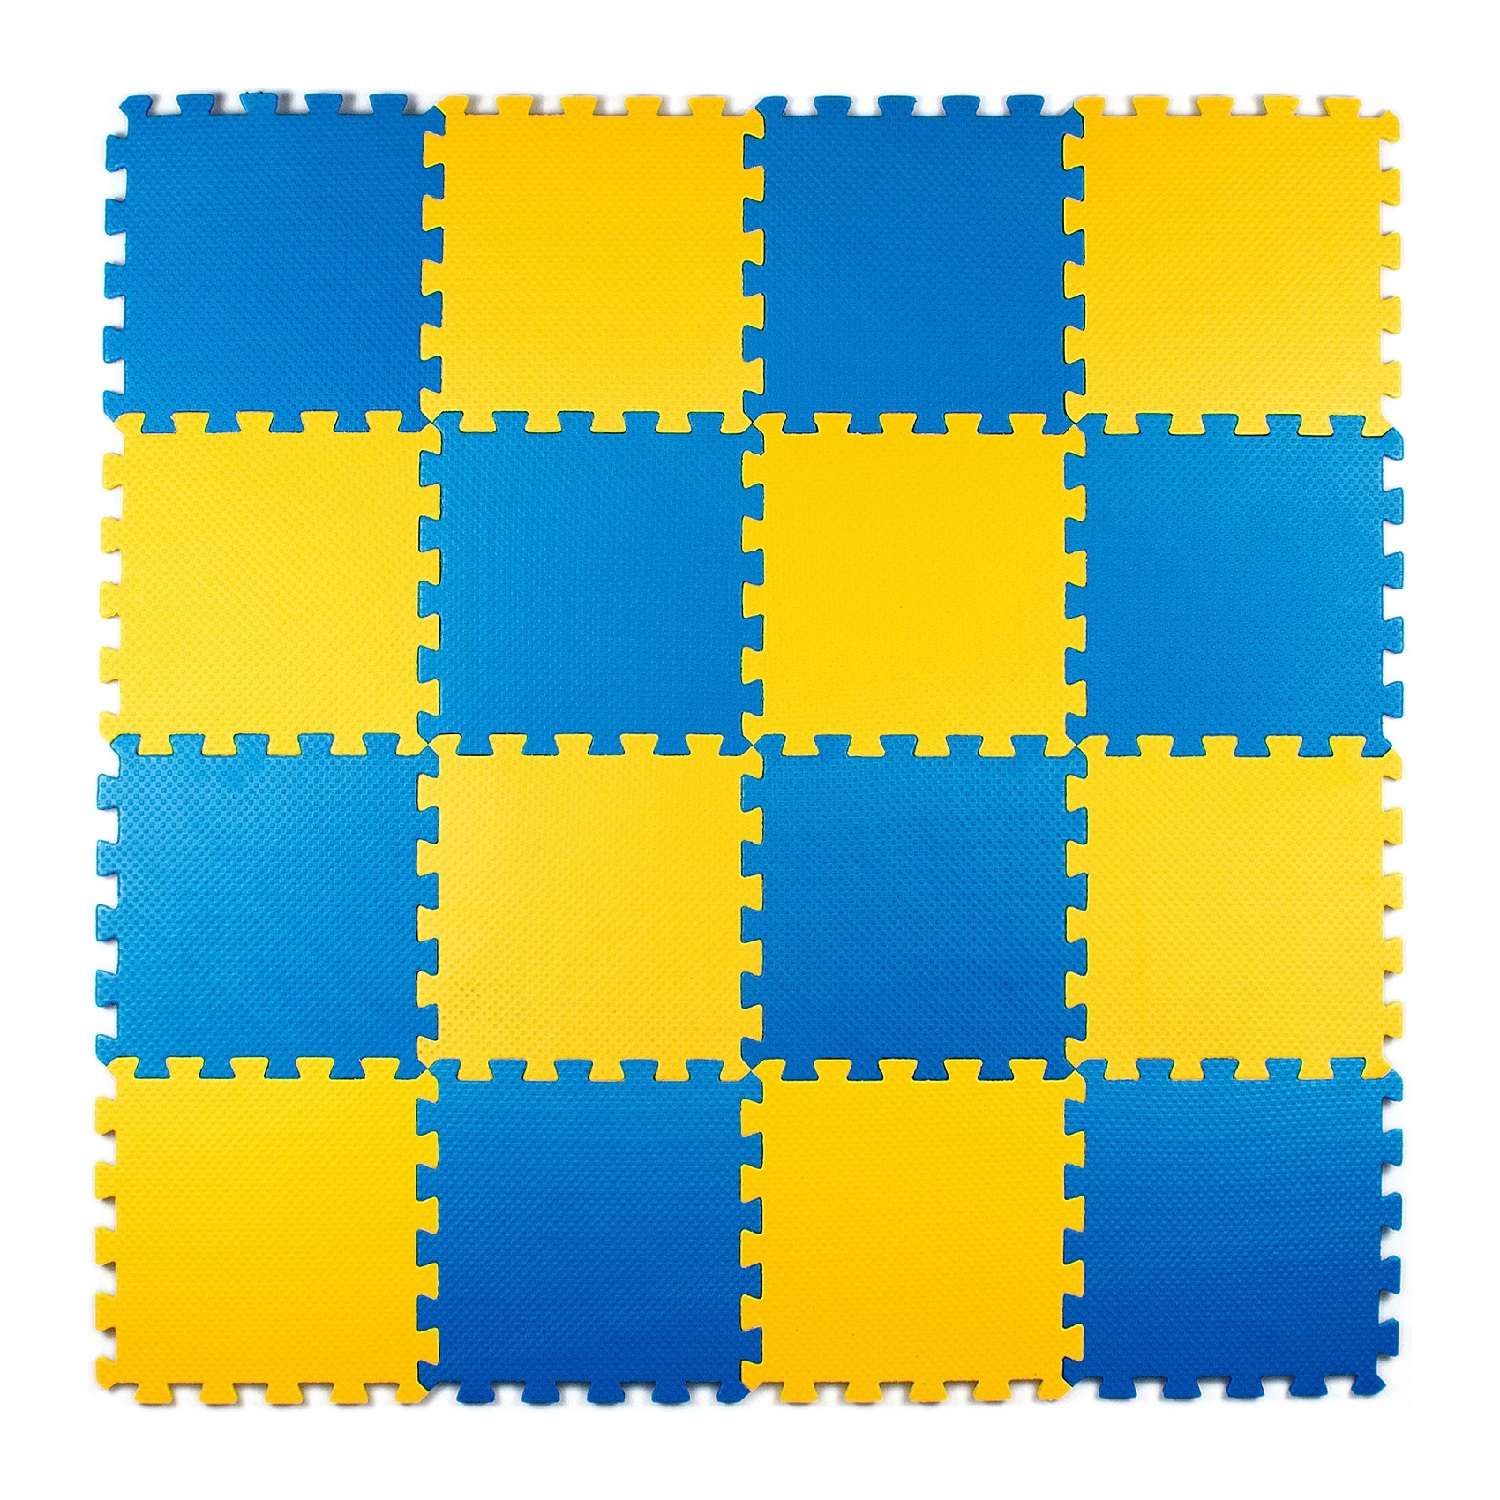 Развивающий детский коврик Eco cover мягкий пол для ползания желто-синий 25х25 - фото 1